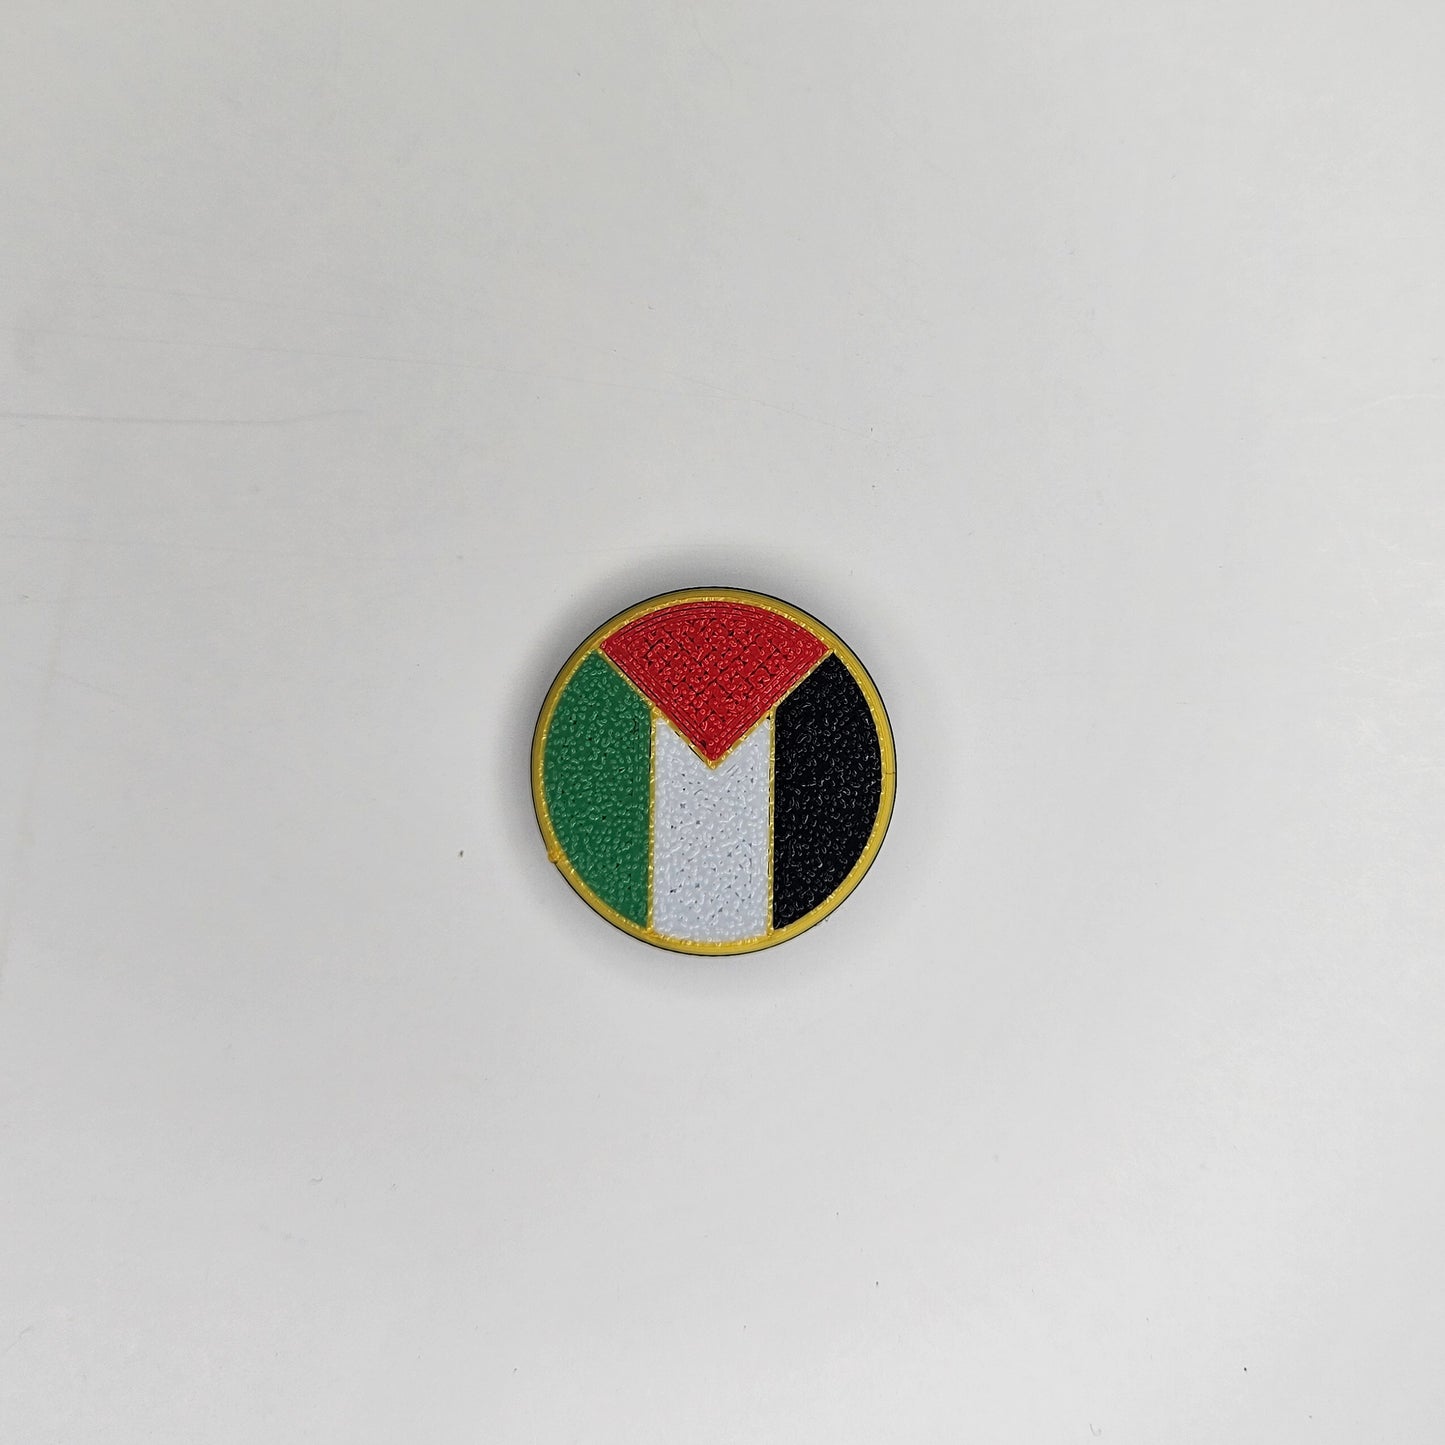 Palestine Flag Pin